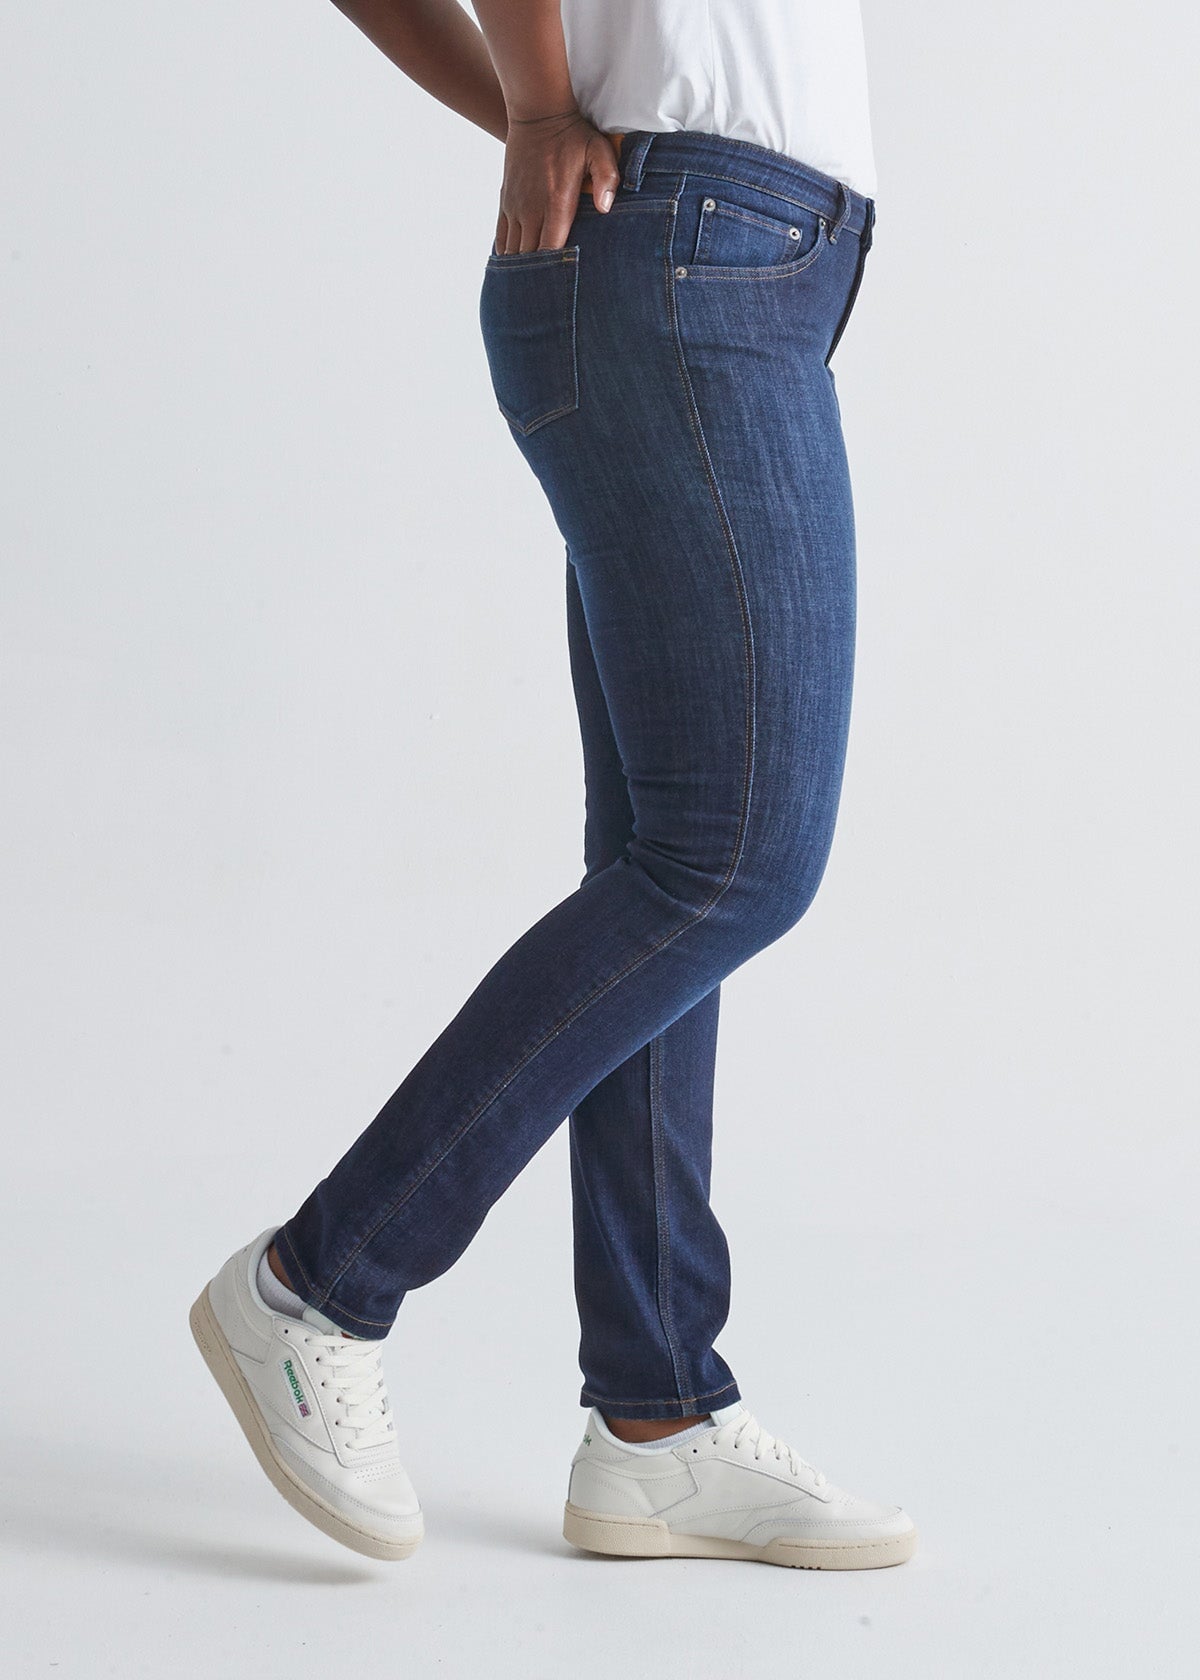 Women's Slim Straight dark blue stretch jeans side